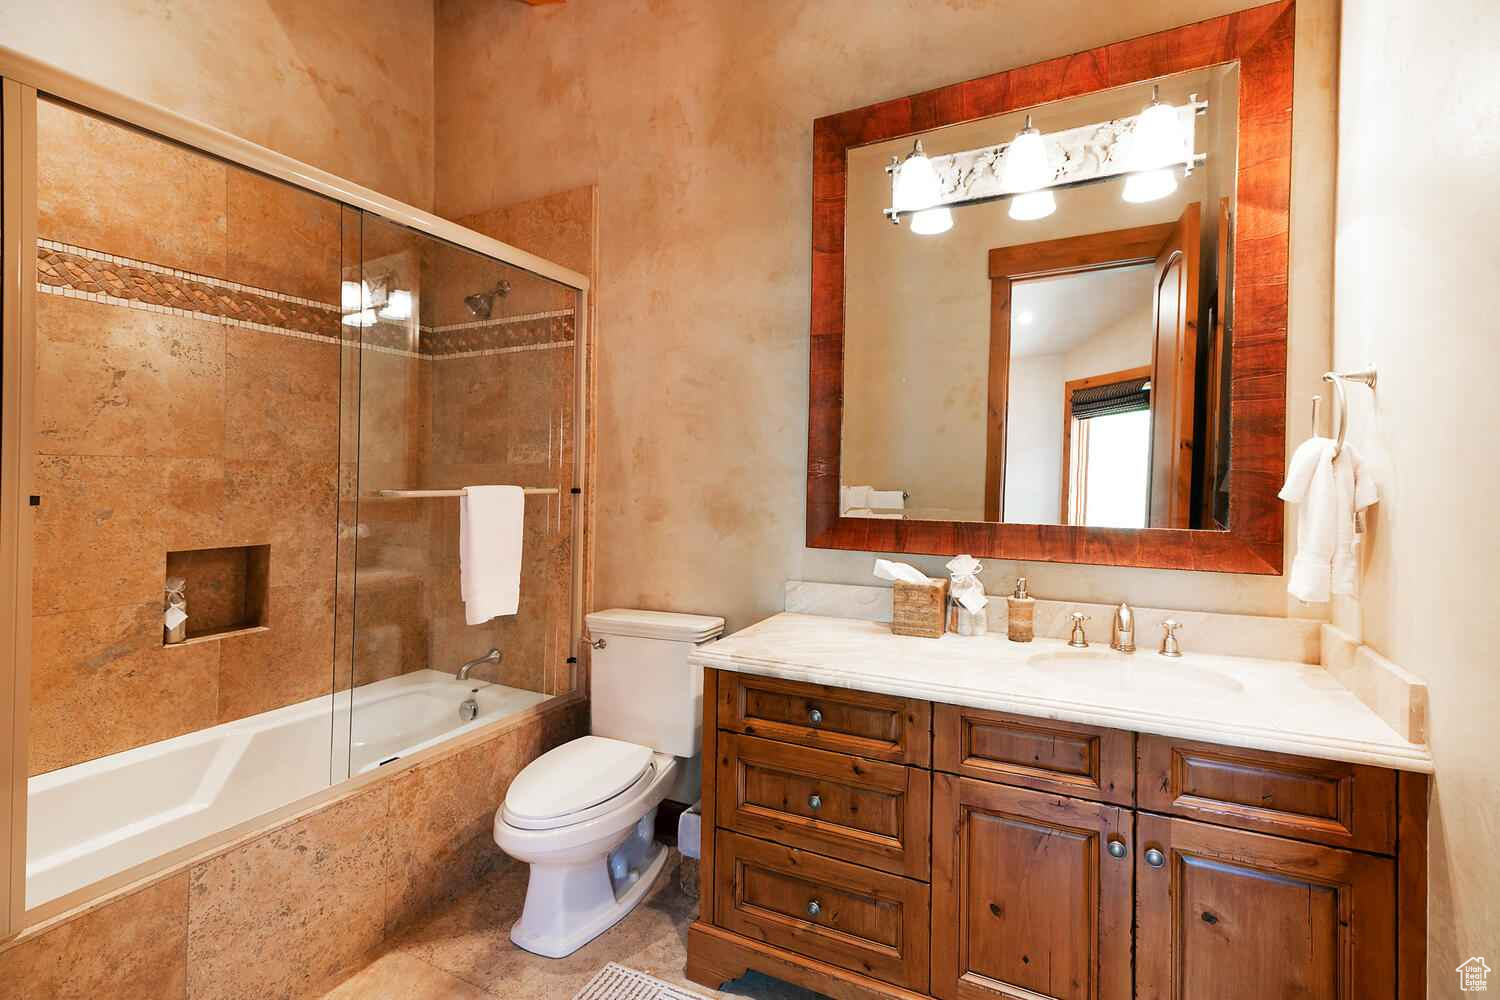 Full bathroom with oversized vanity, shower / bath combination with glass door, tile floors, and toilet